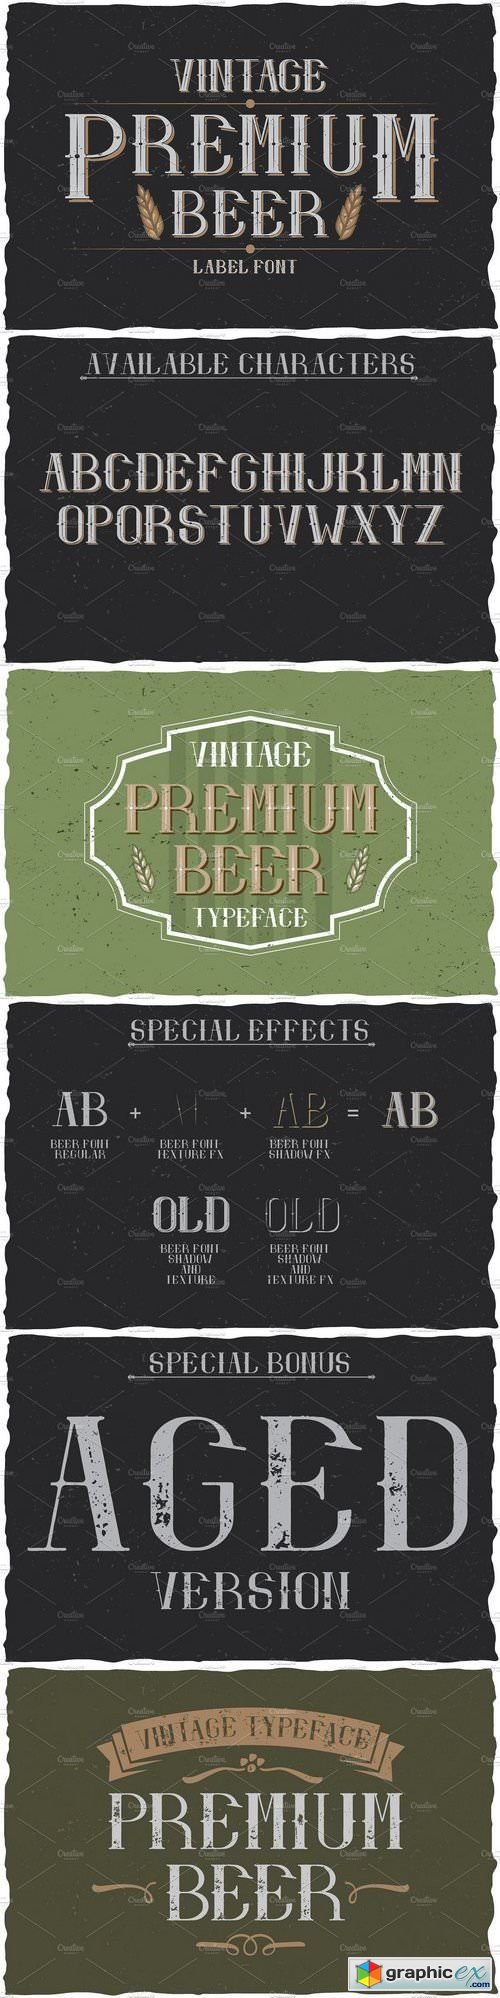 Premium Beer Vintage Label Typeface